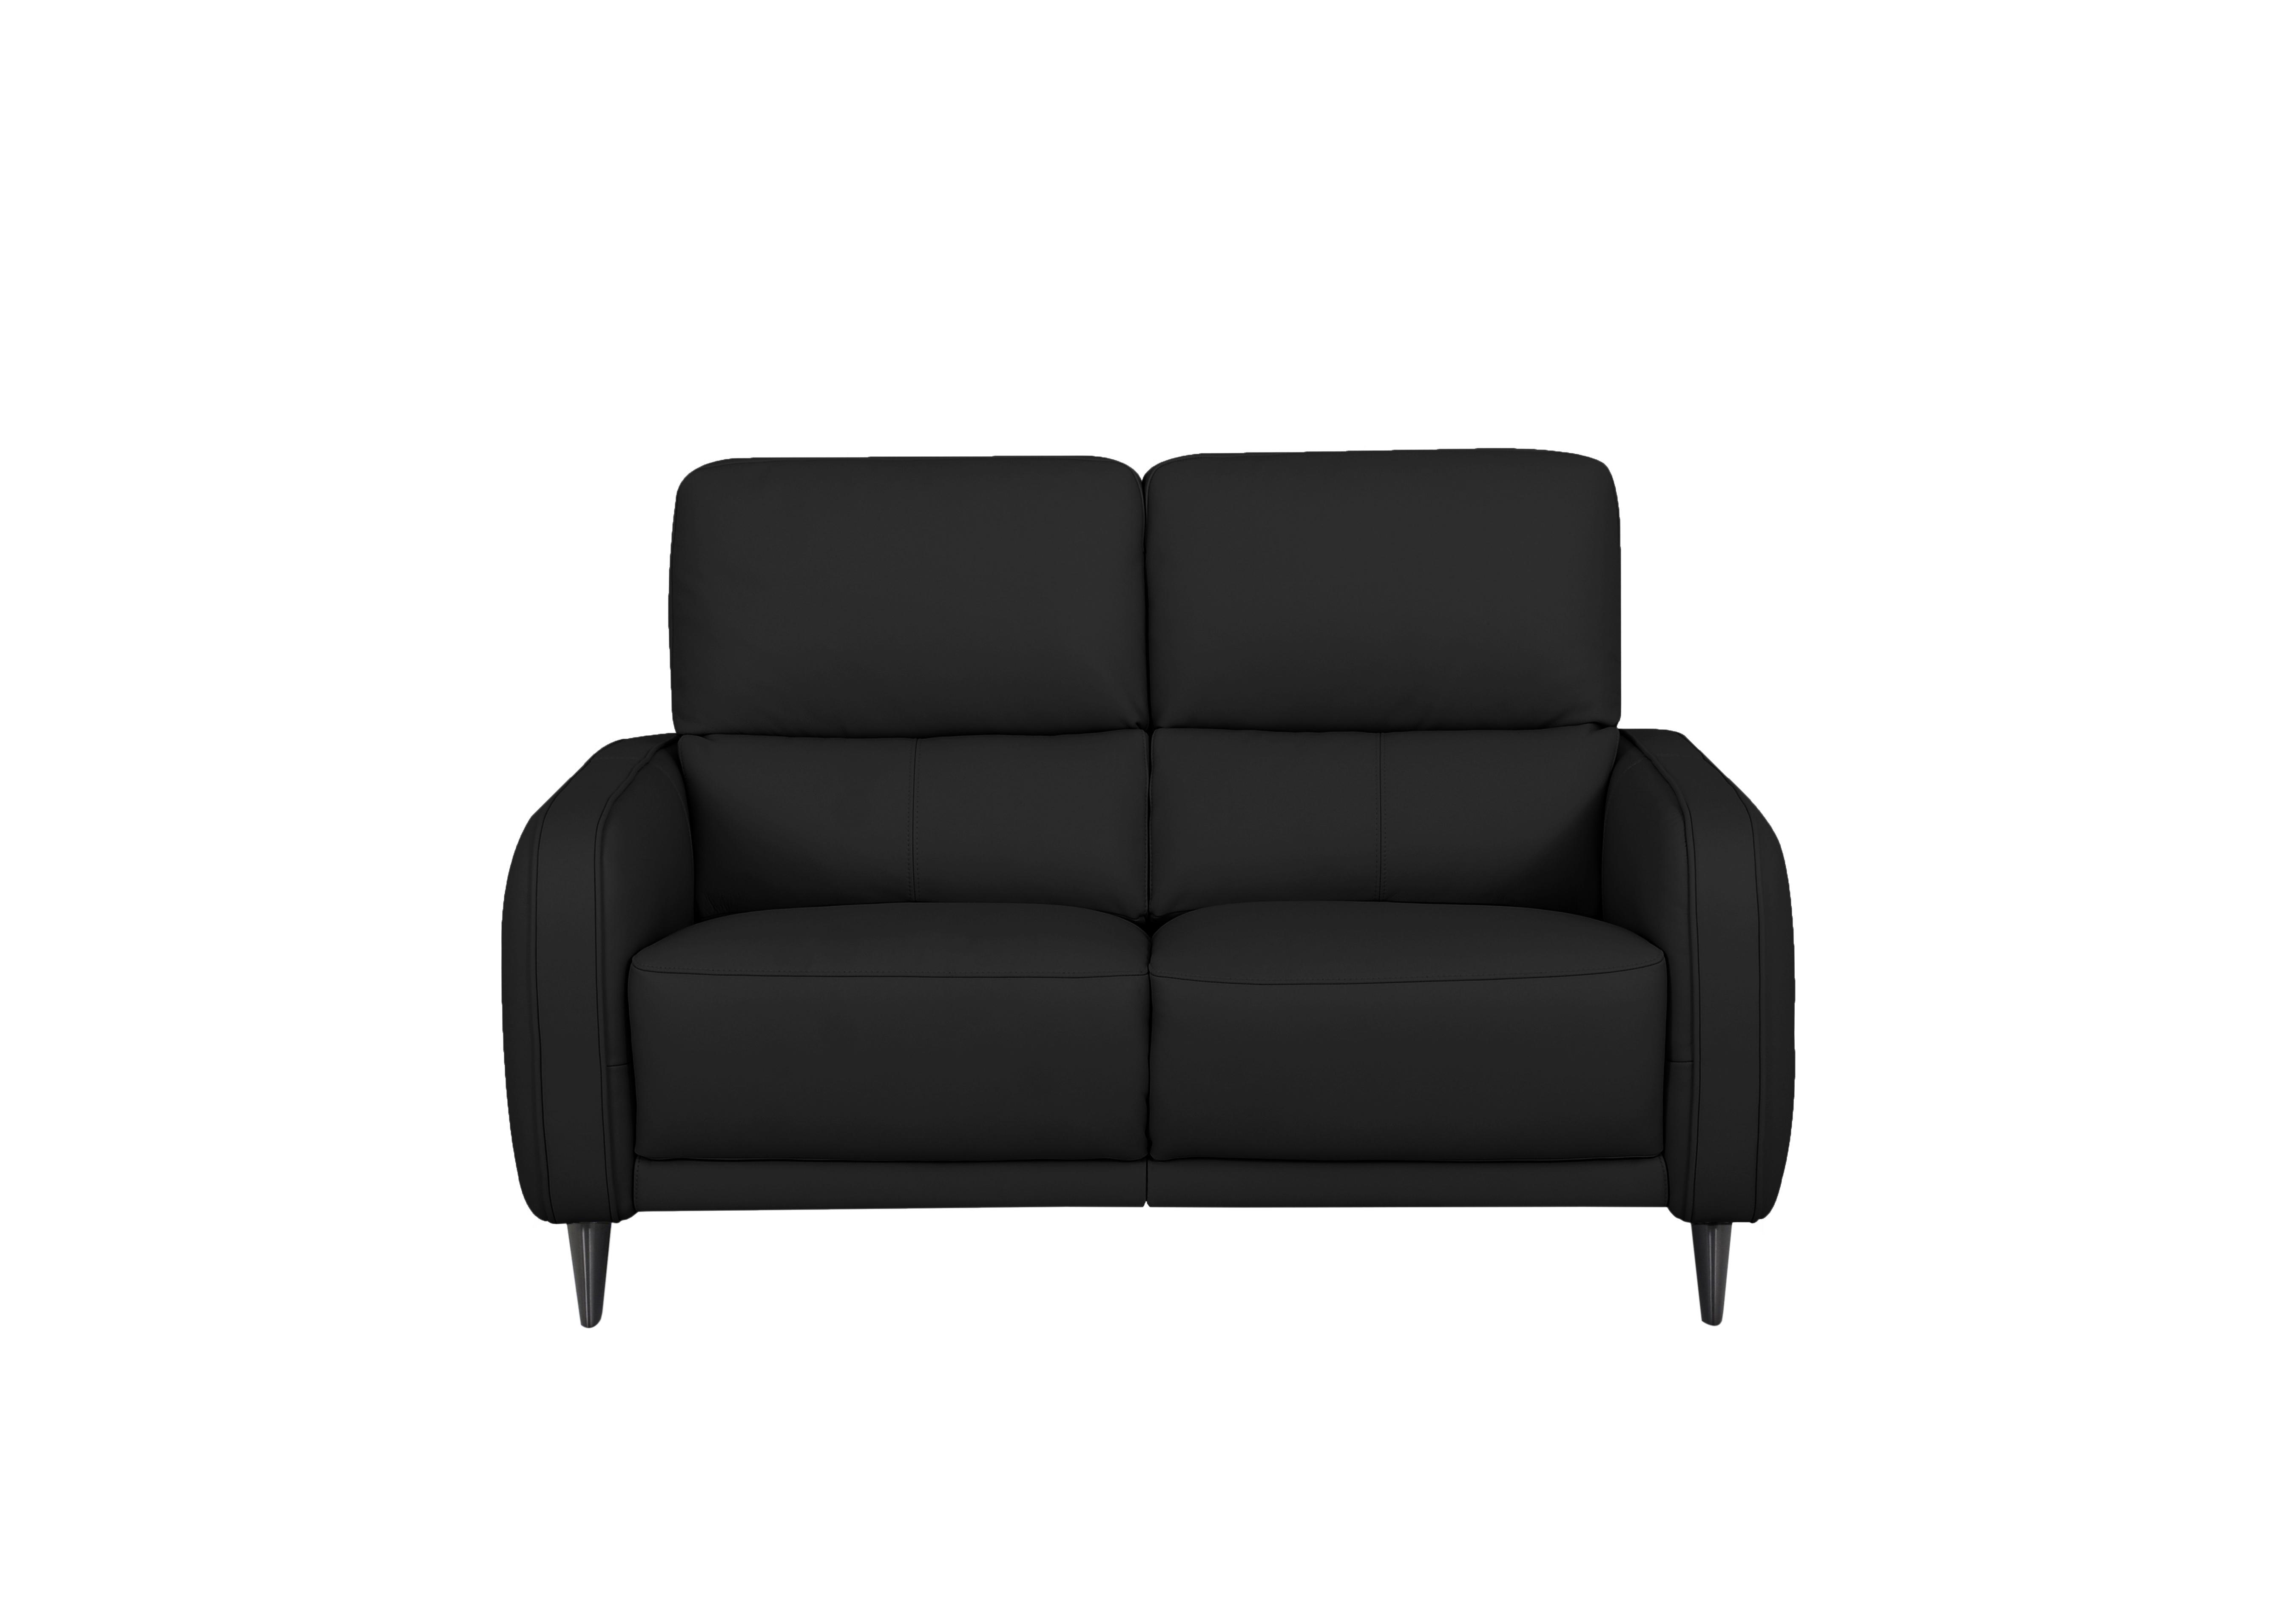 Logan 2 Seater Leather Sofa in Nn-514e Black on Furniture Village